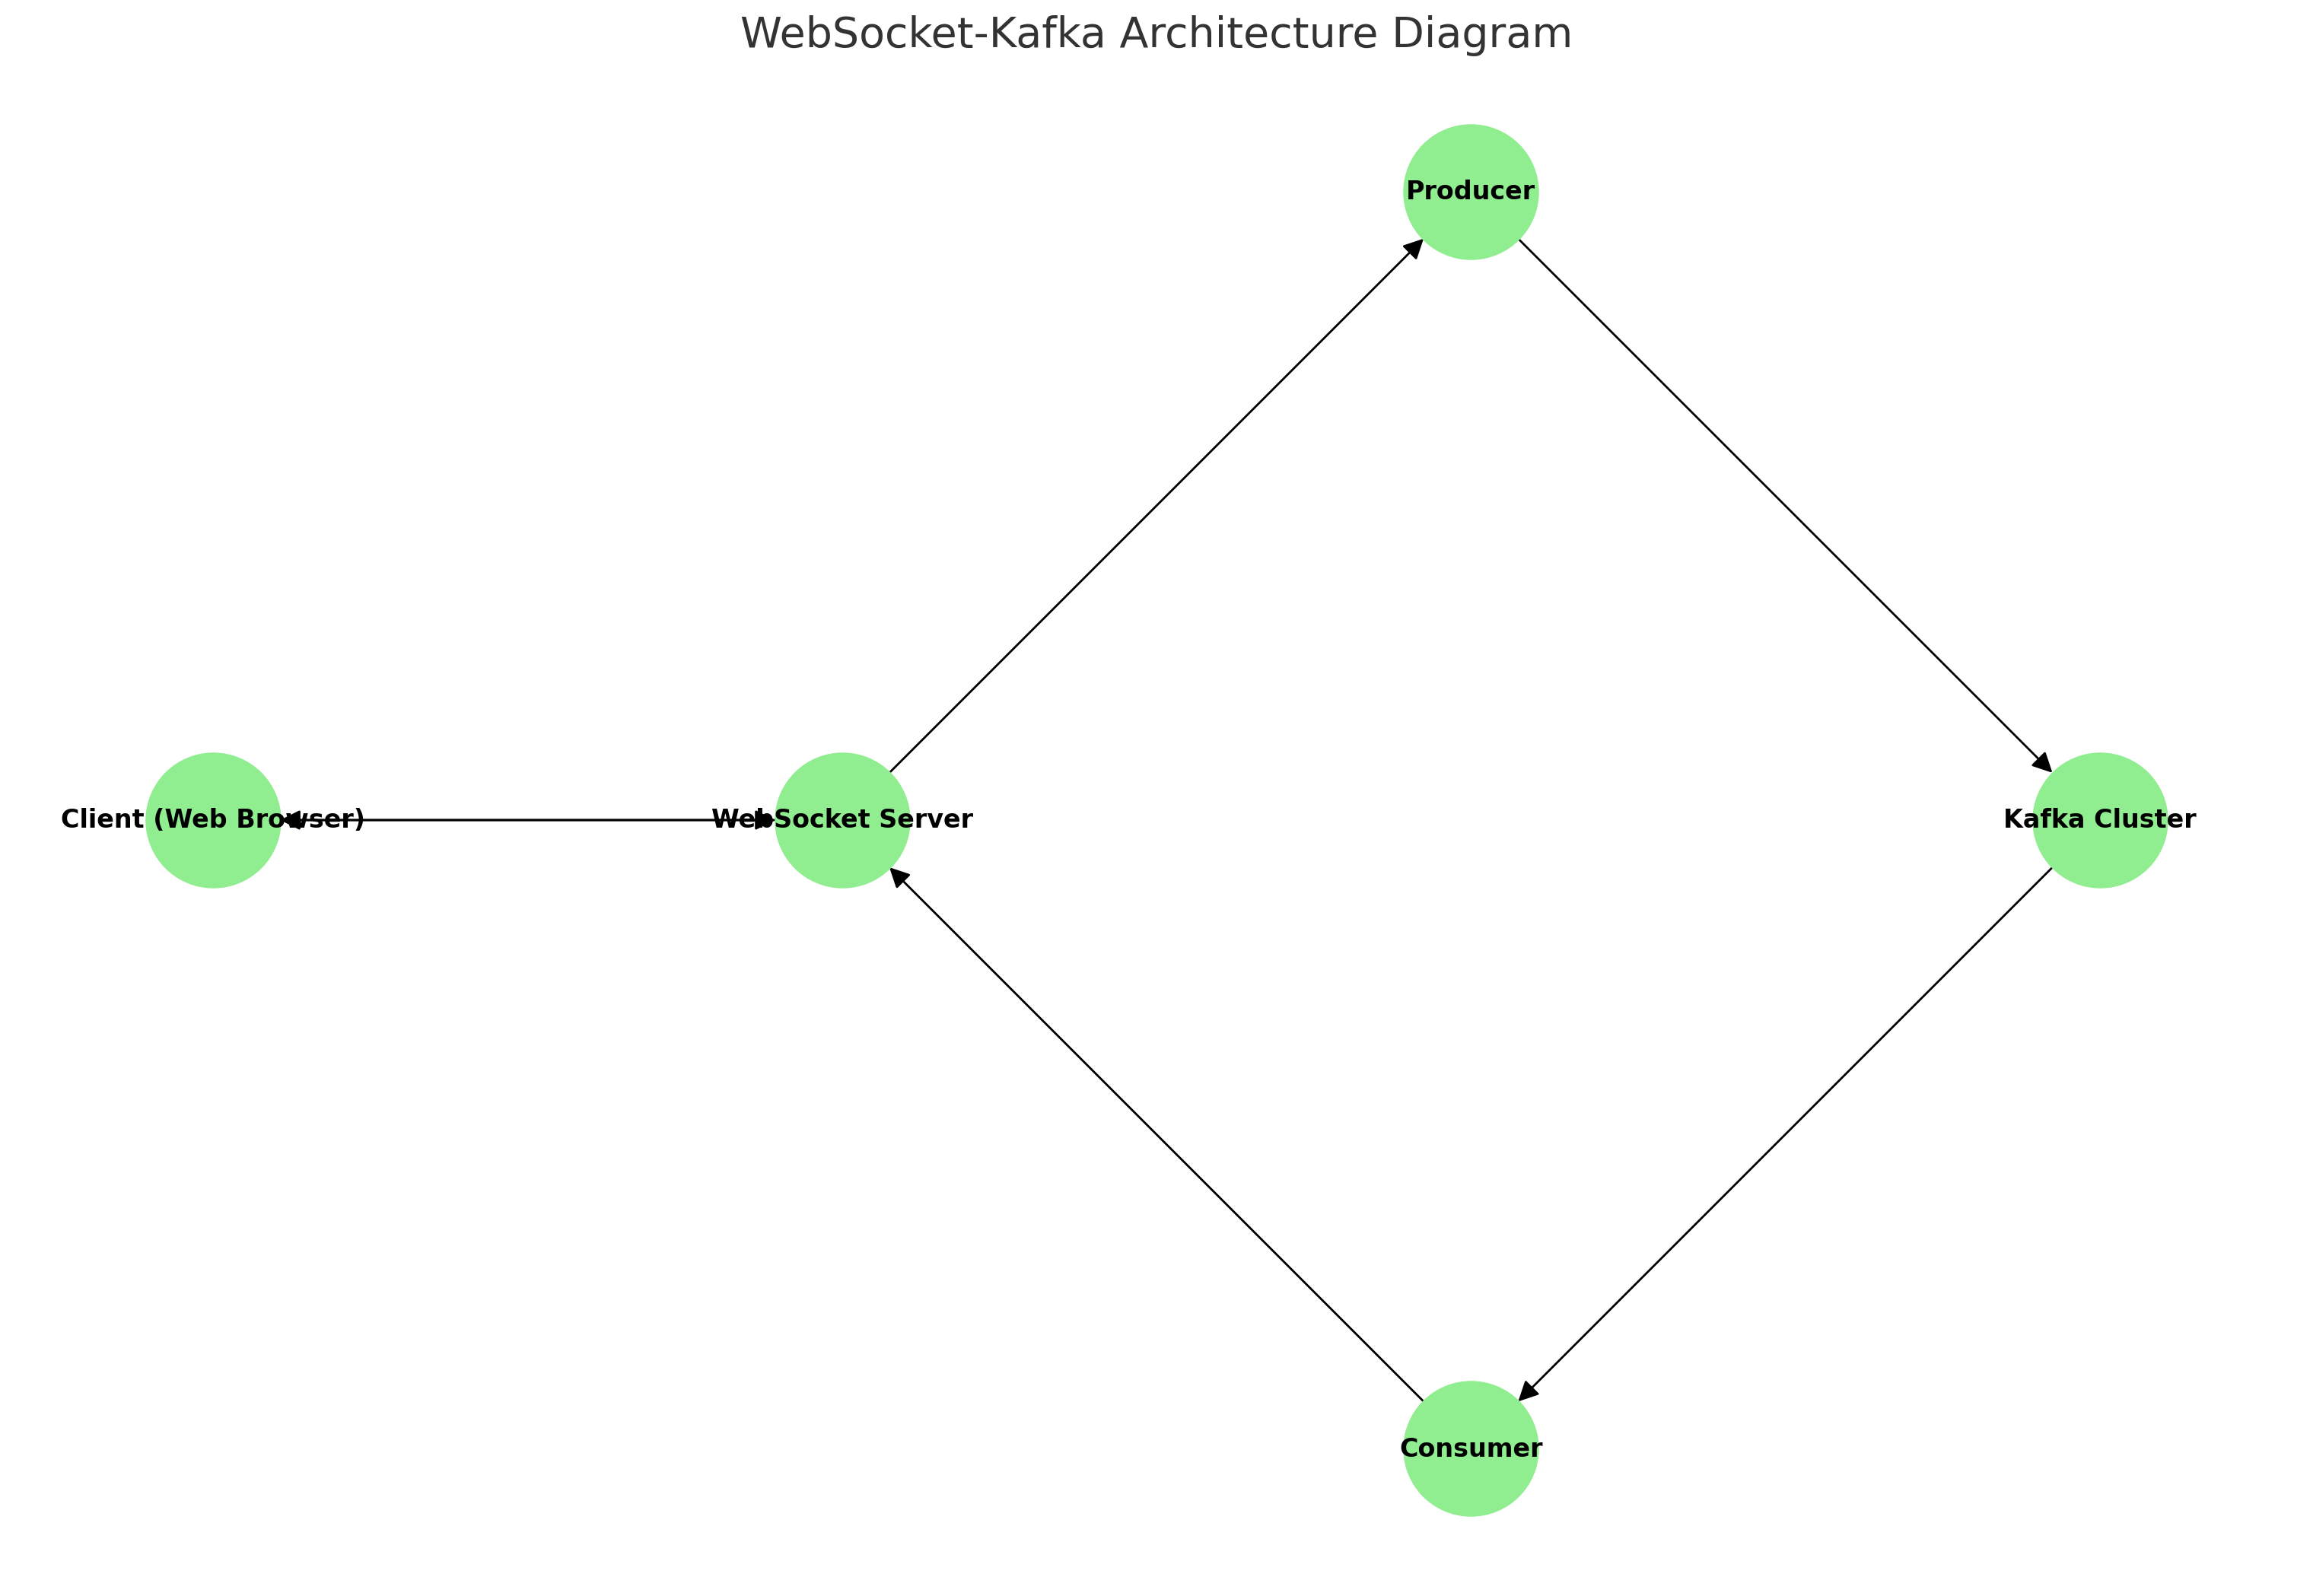 WebSocket-Kafka Architecture Diagram